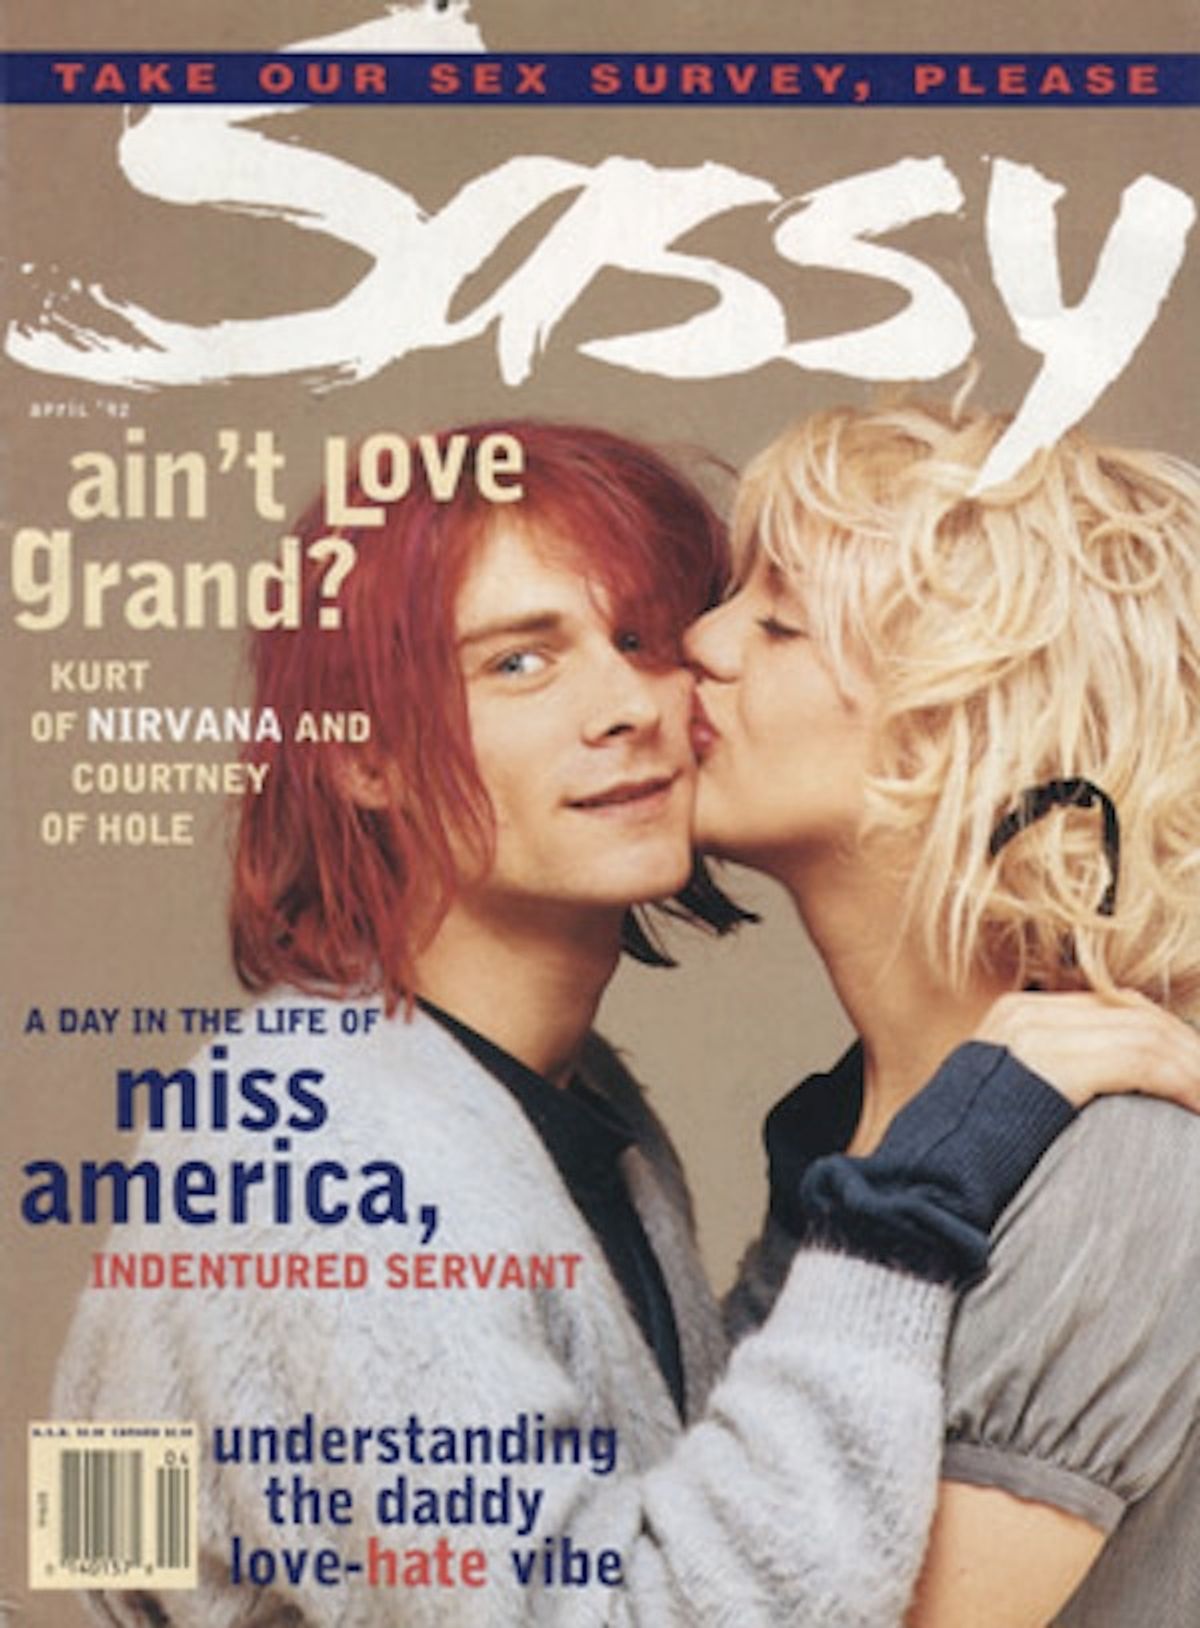 Jane Pratt's previous endeavor, "Sassy" magazine.